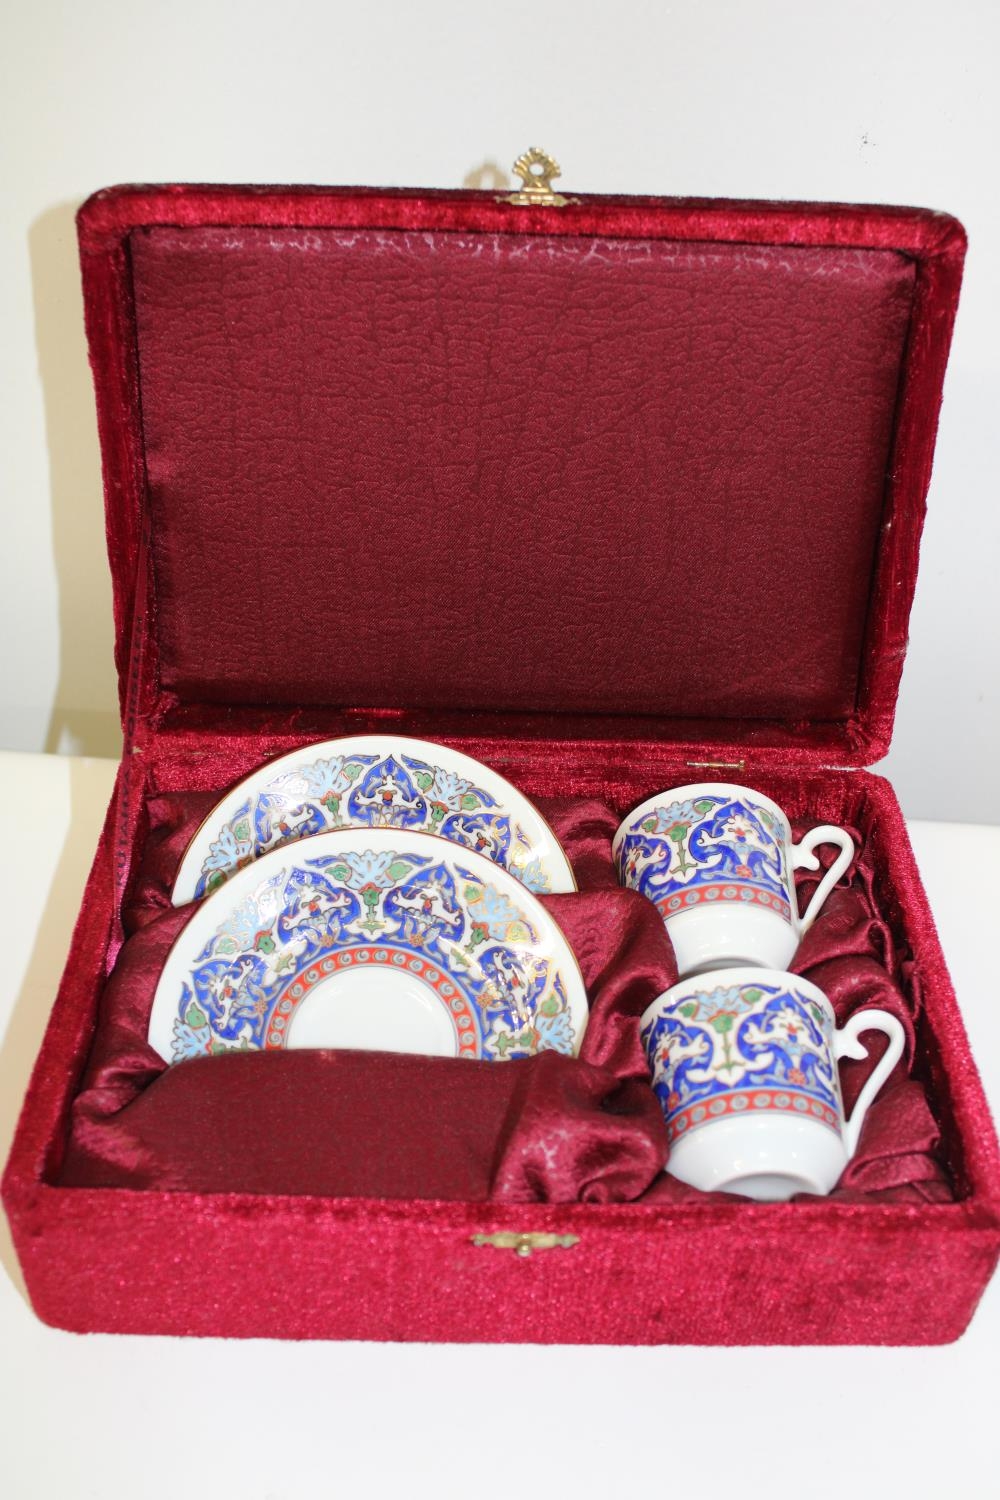 A pretty boxed set of Kutahya porcelain